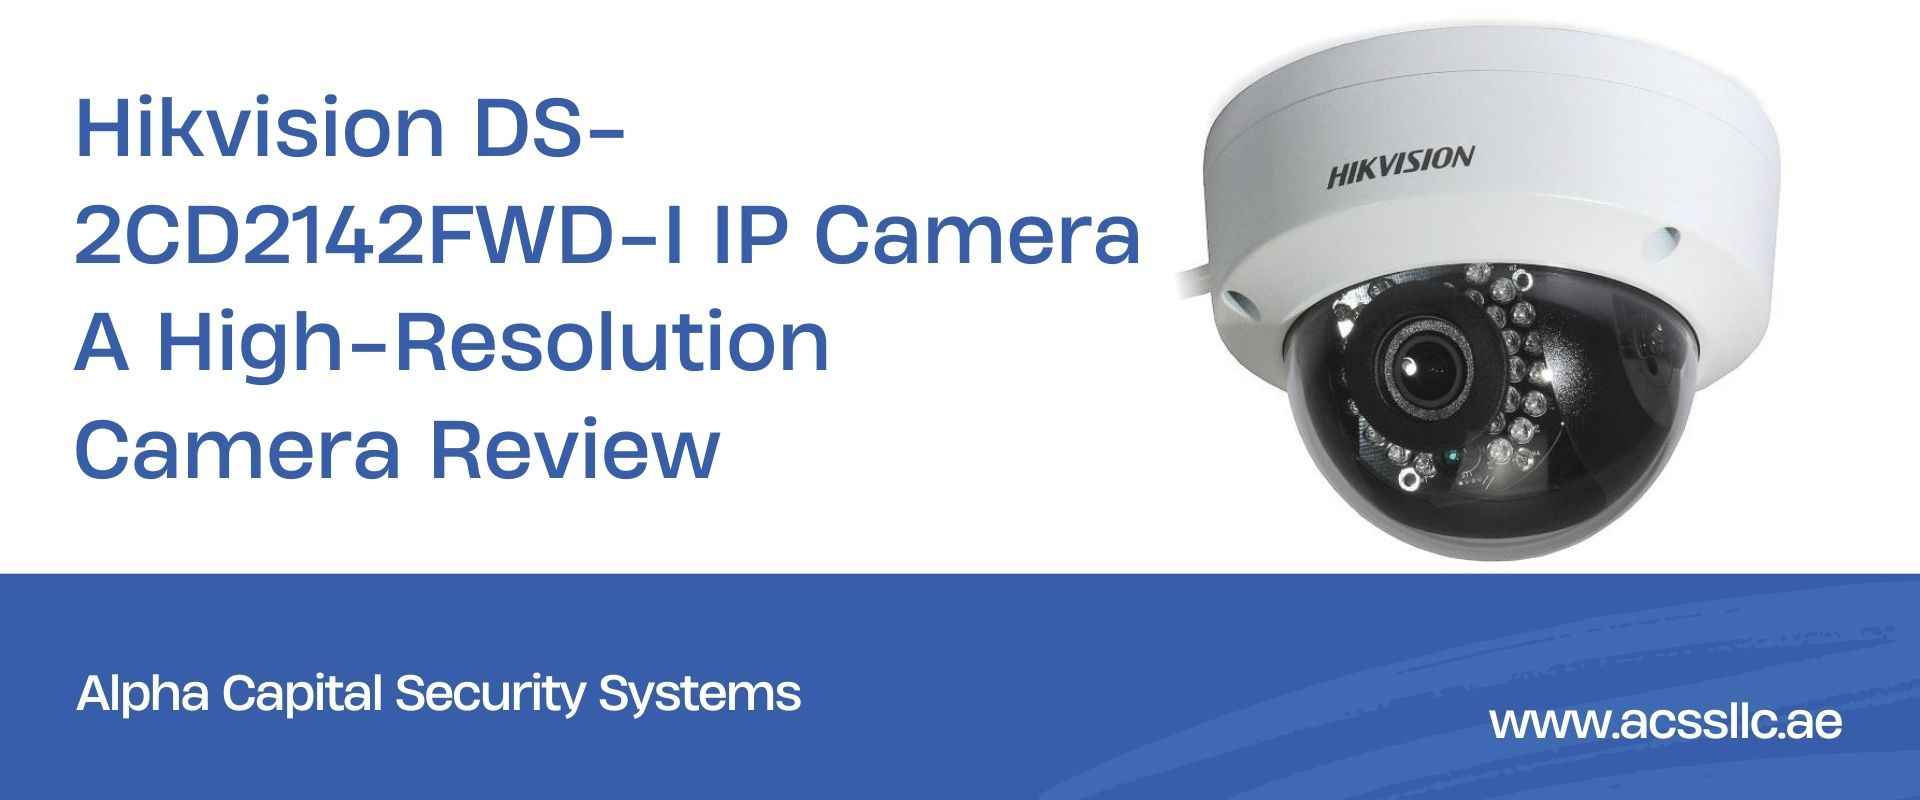 Hikvision DS-2CD2142FWD-I IP Camera